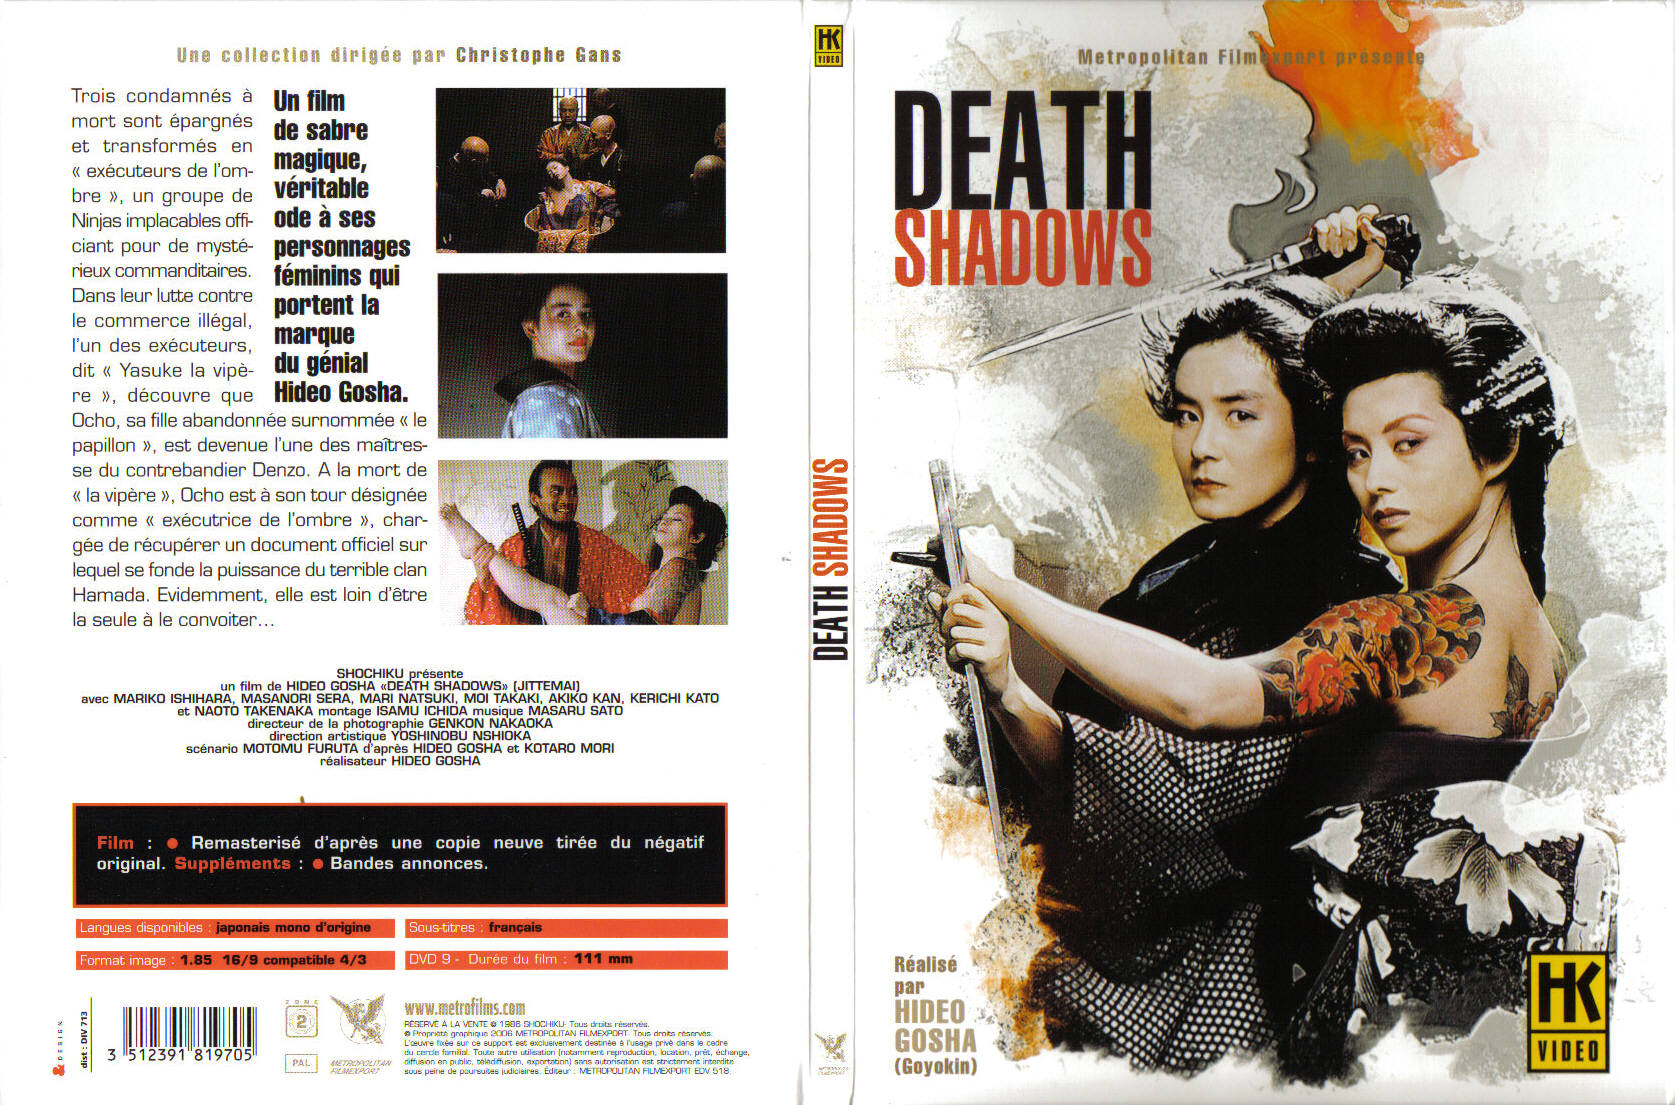 Jaquette DVD Death shadows